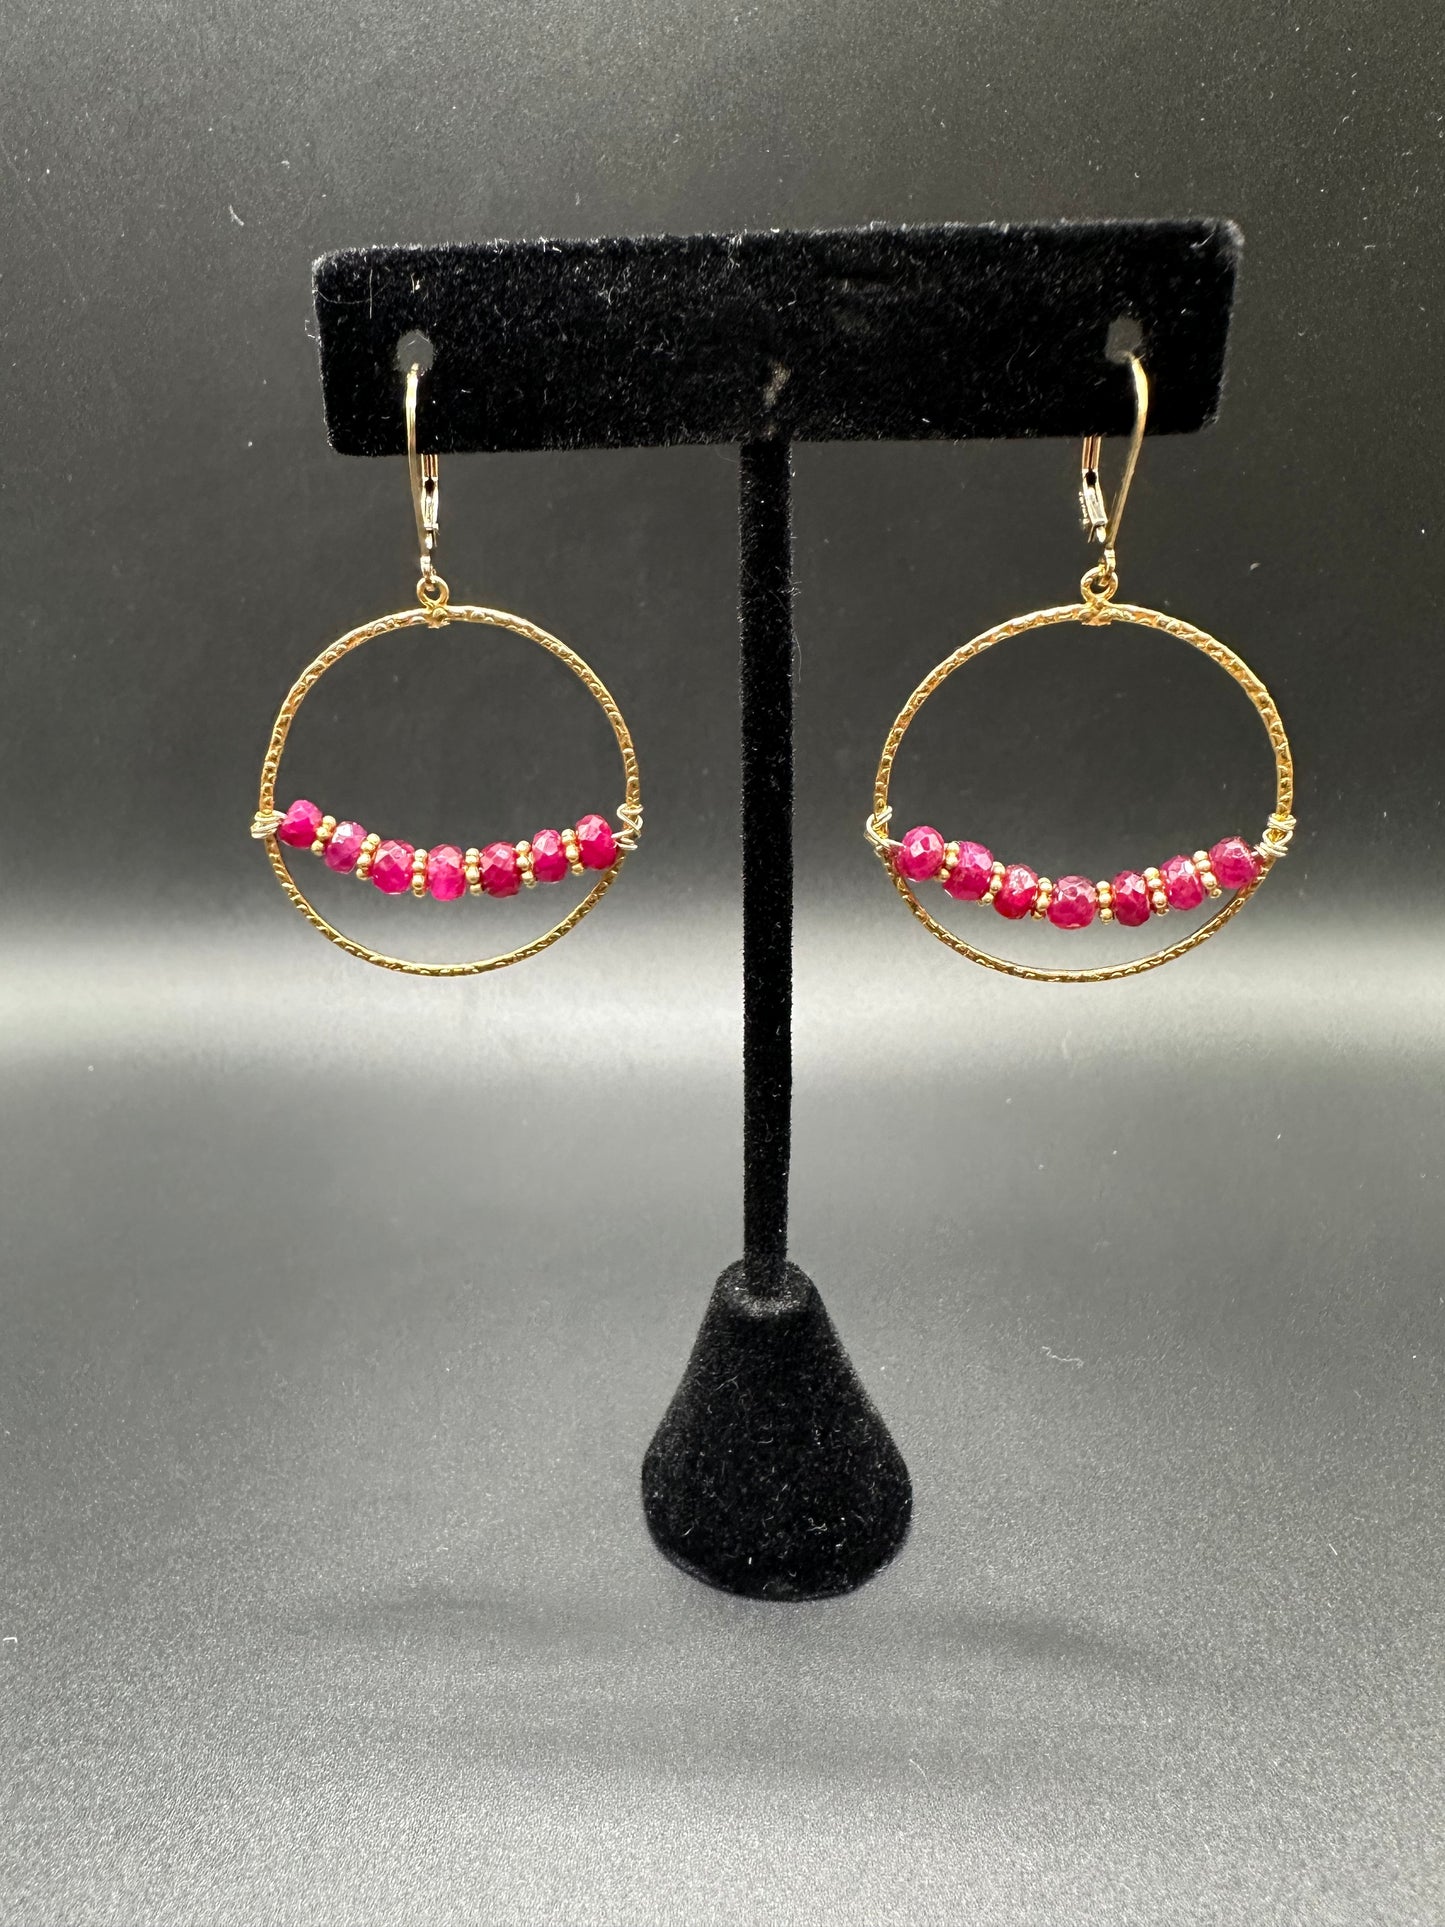 Bella Bloom Earrings - Sapphires on 14K Gold Fill Hoops